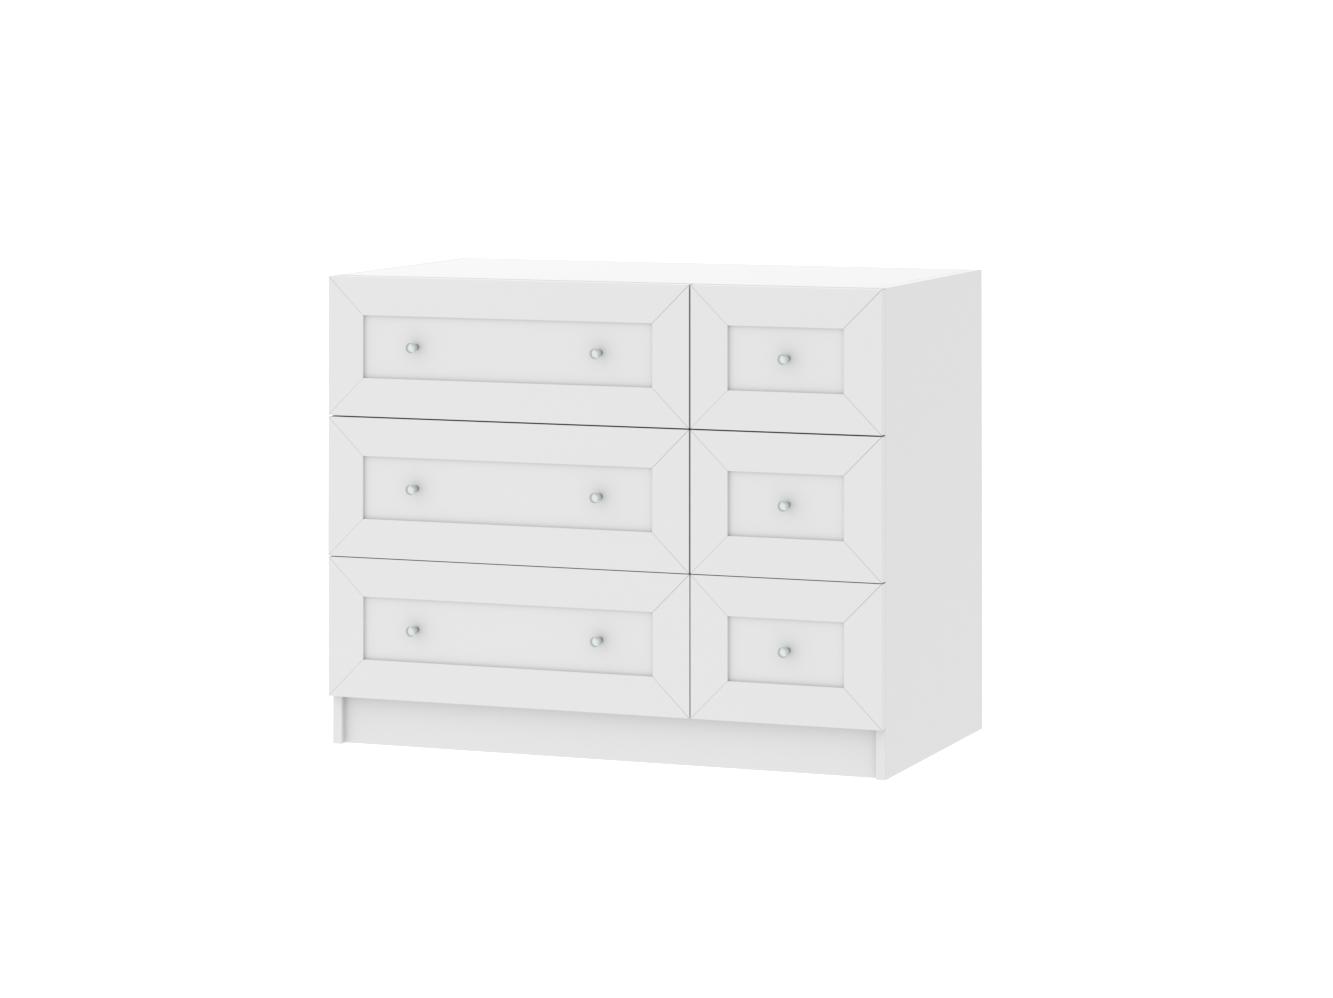 Изображение товара Комод Билли 217 white ИКЕА (IKEA), 90x50x70 см на сайте adeta.ru